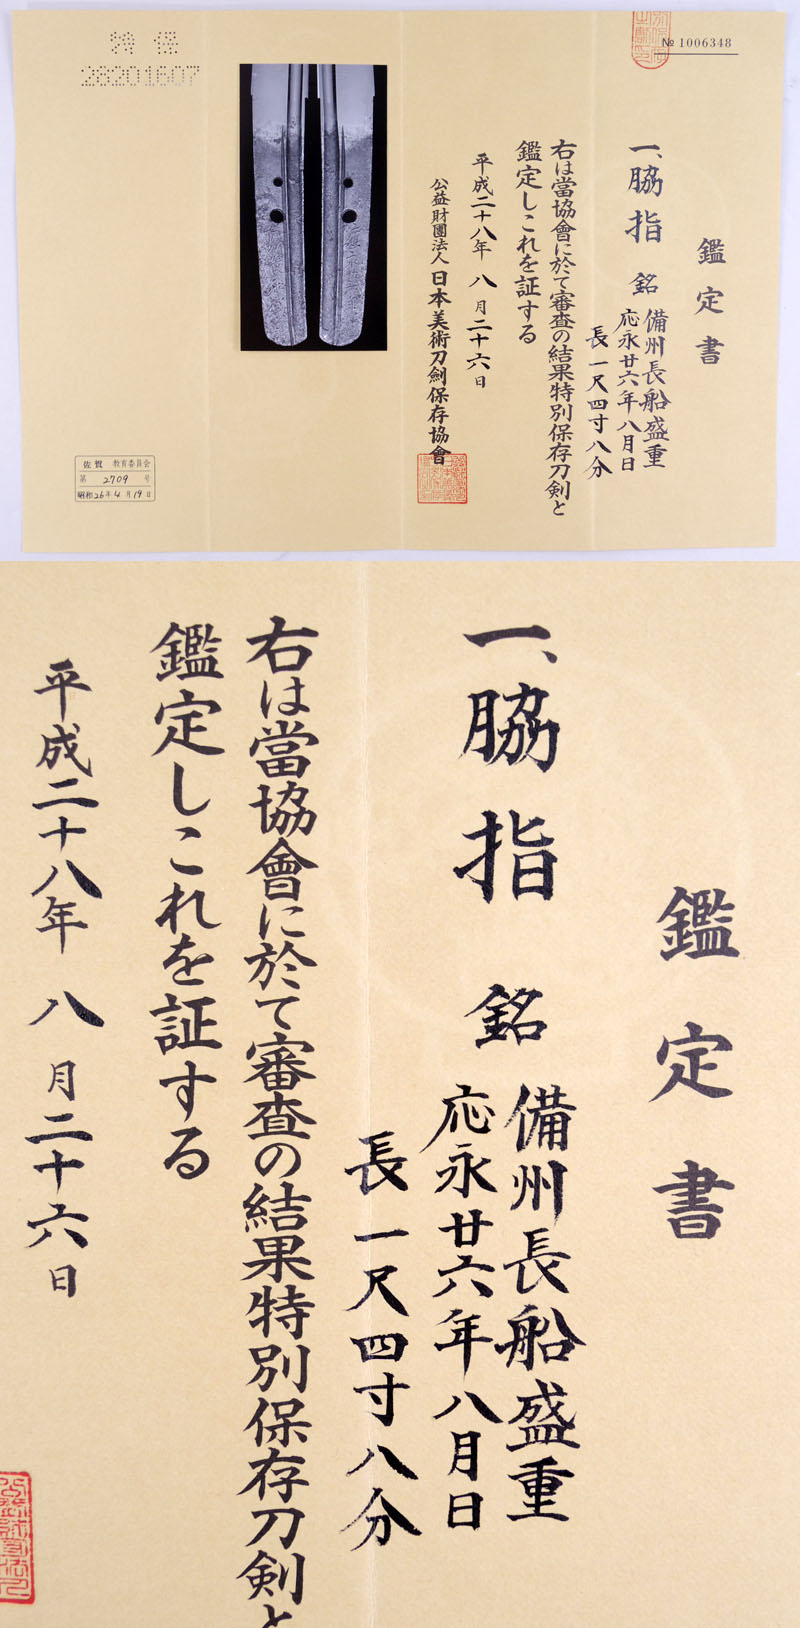 備州長船盛重（応永備前） Picture of Certificate